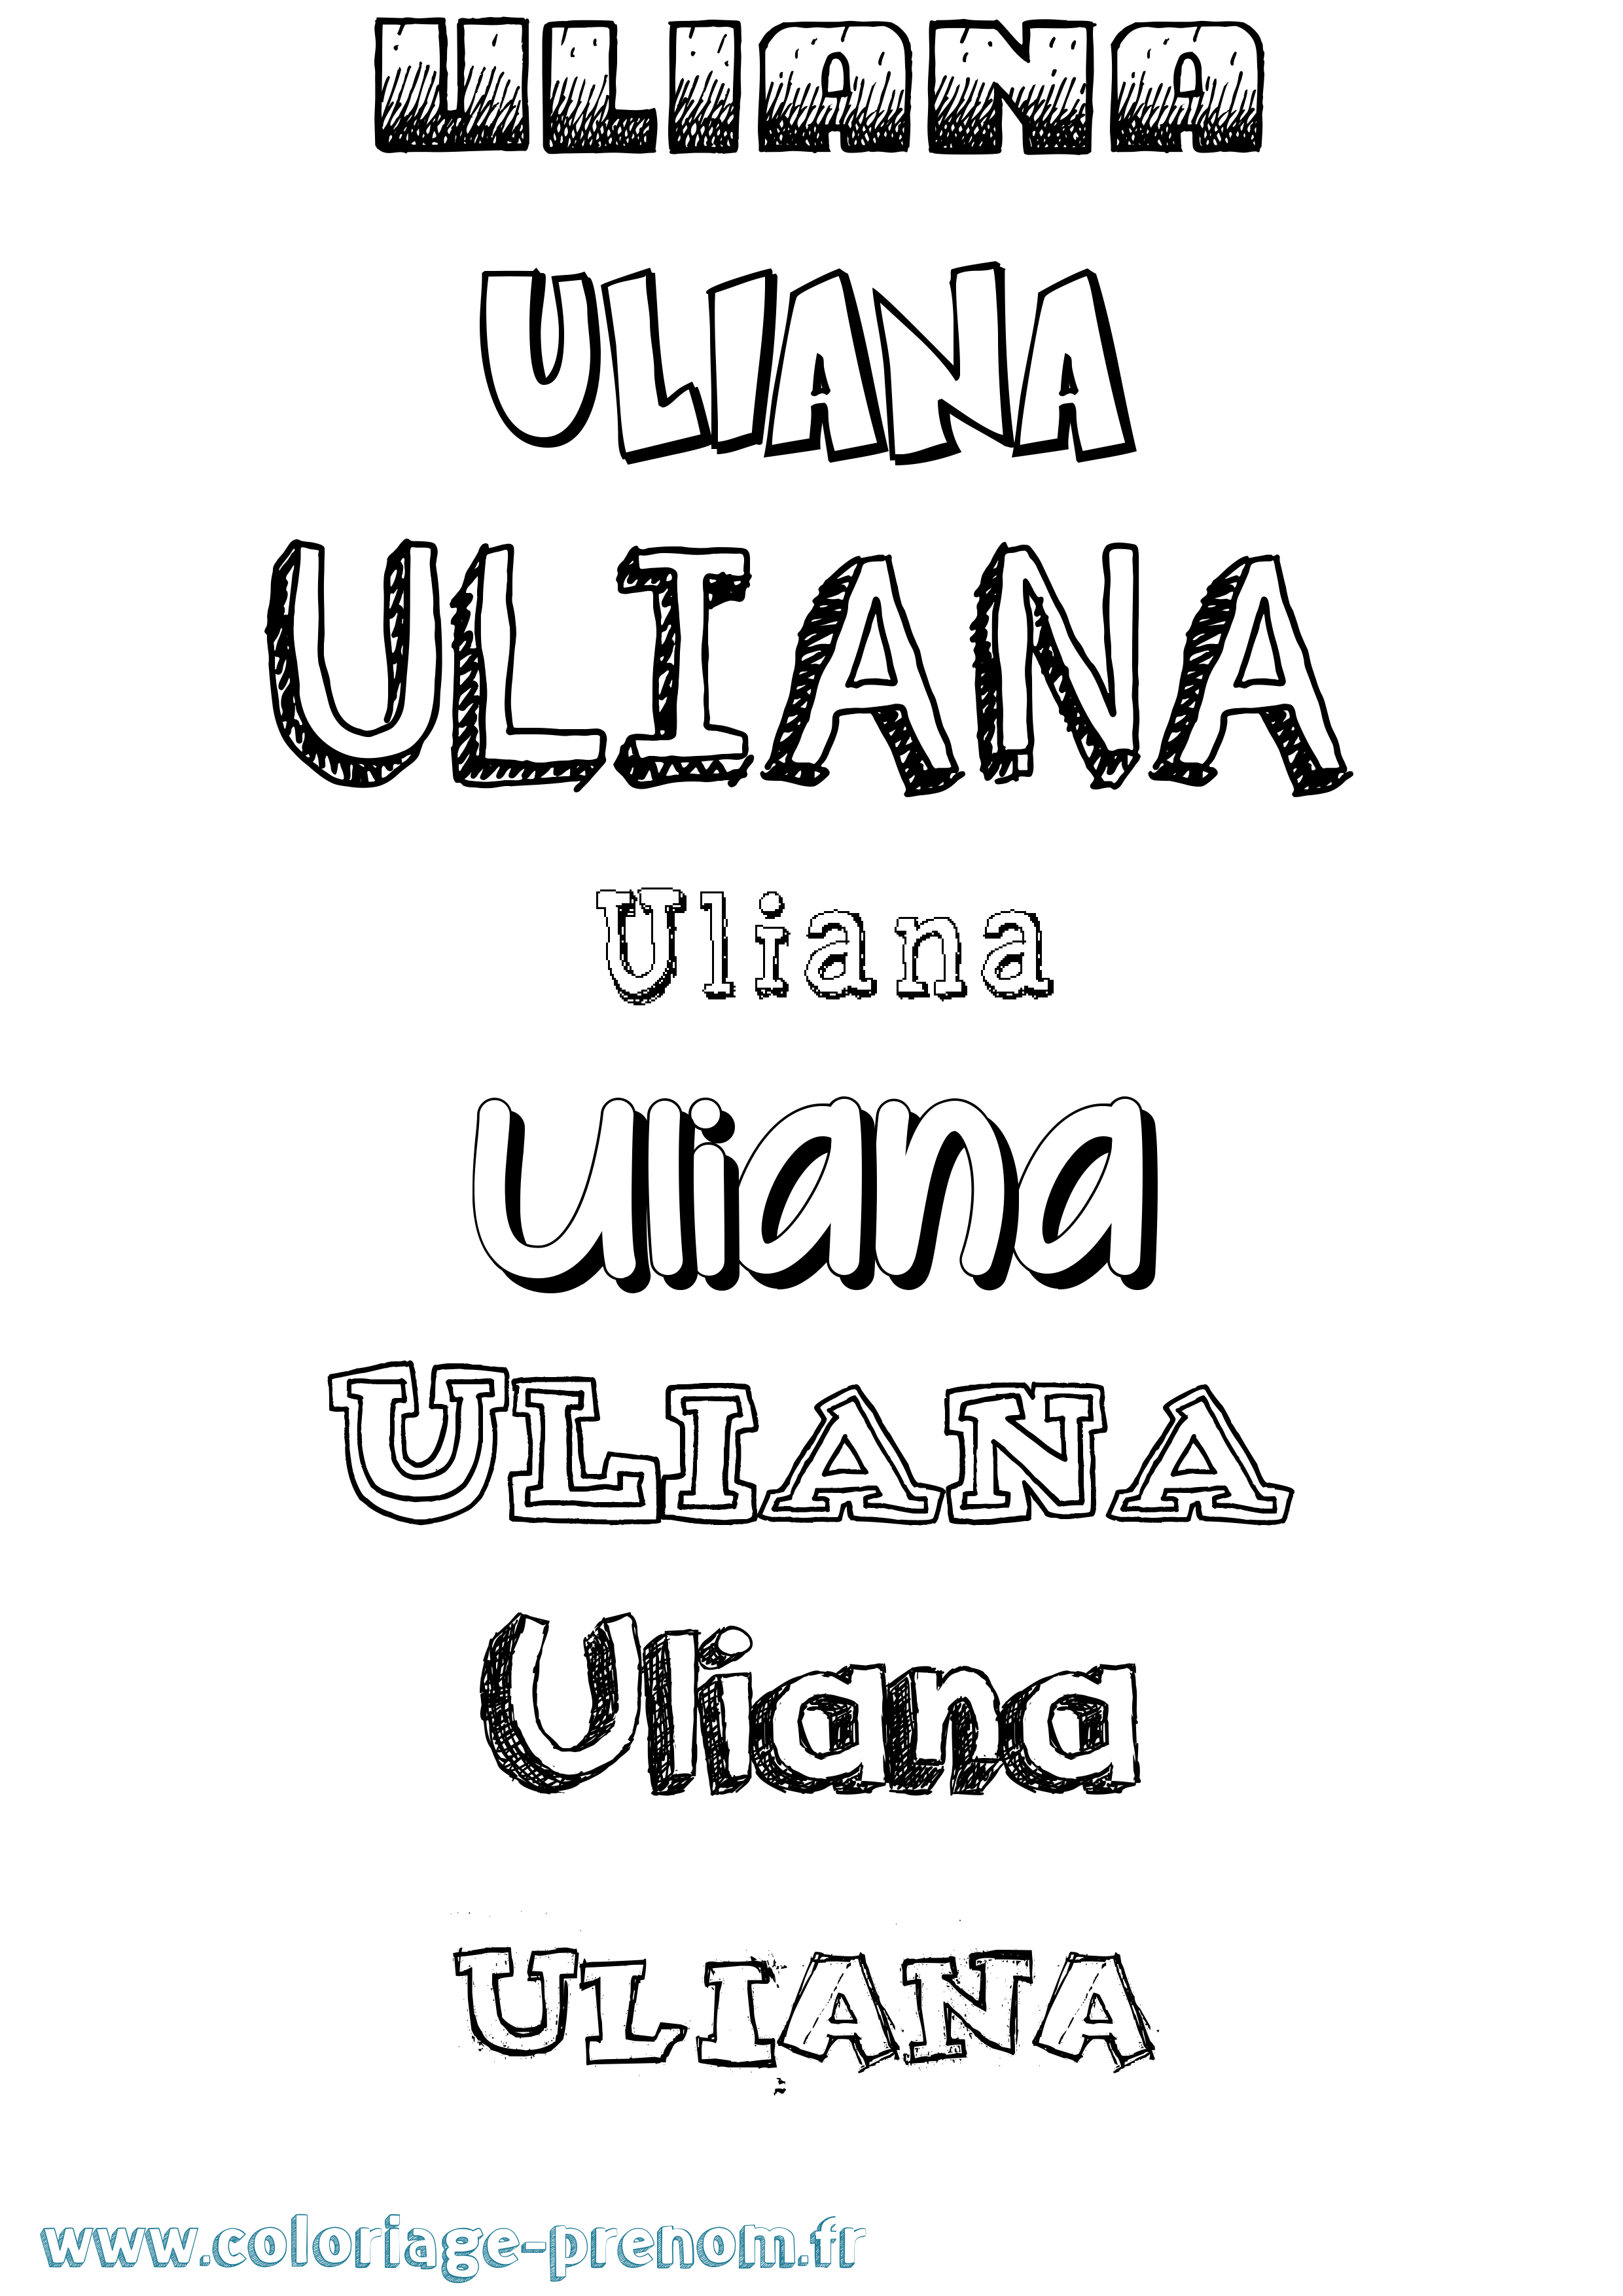 Coloriage prénom Uliana Dessiné